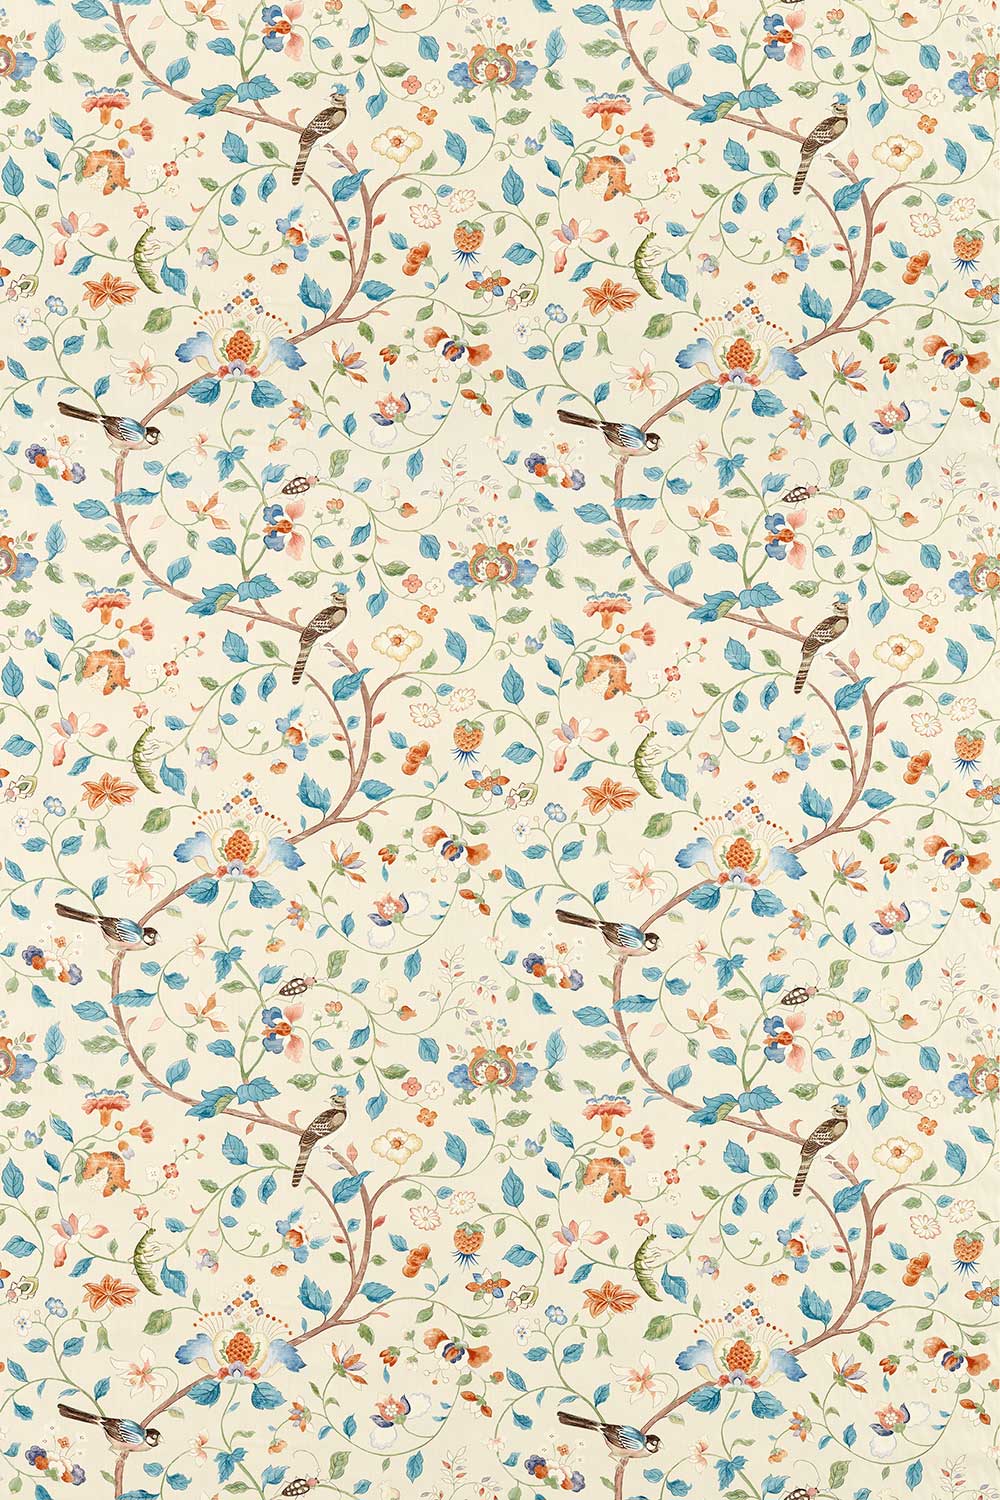 Arils Garden Fabric - Teal / Russet - by Sanderson